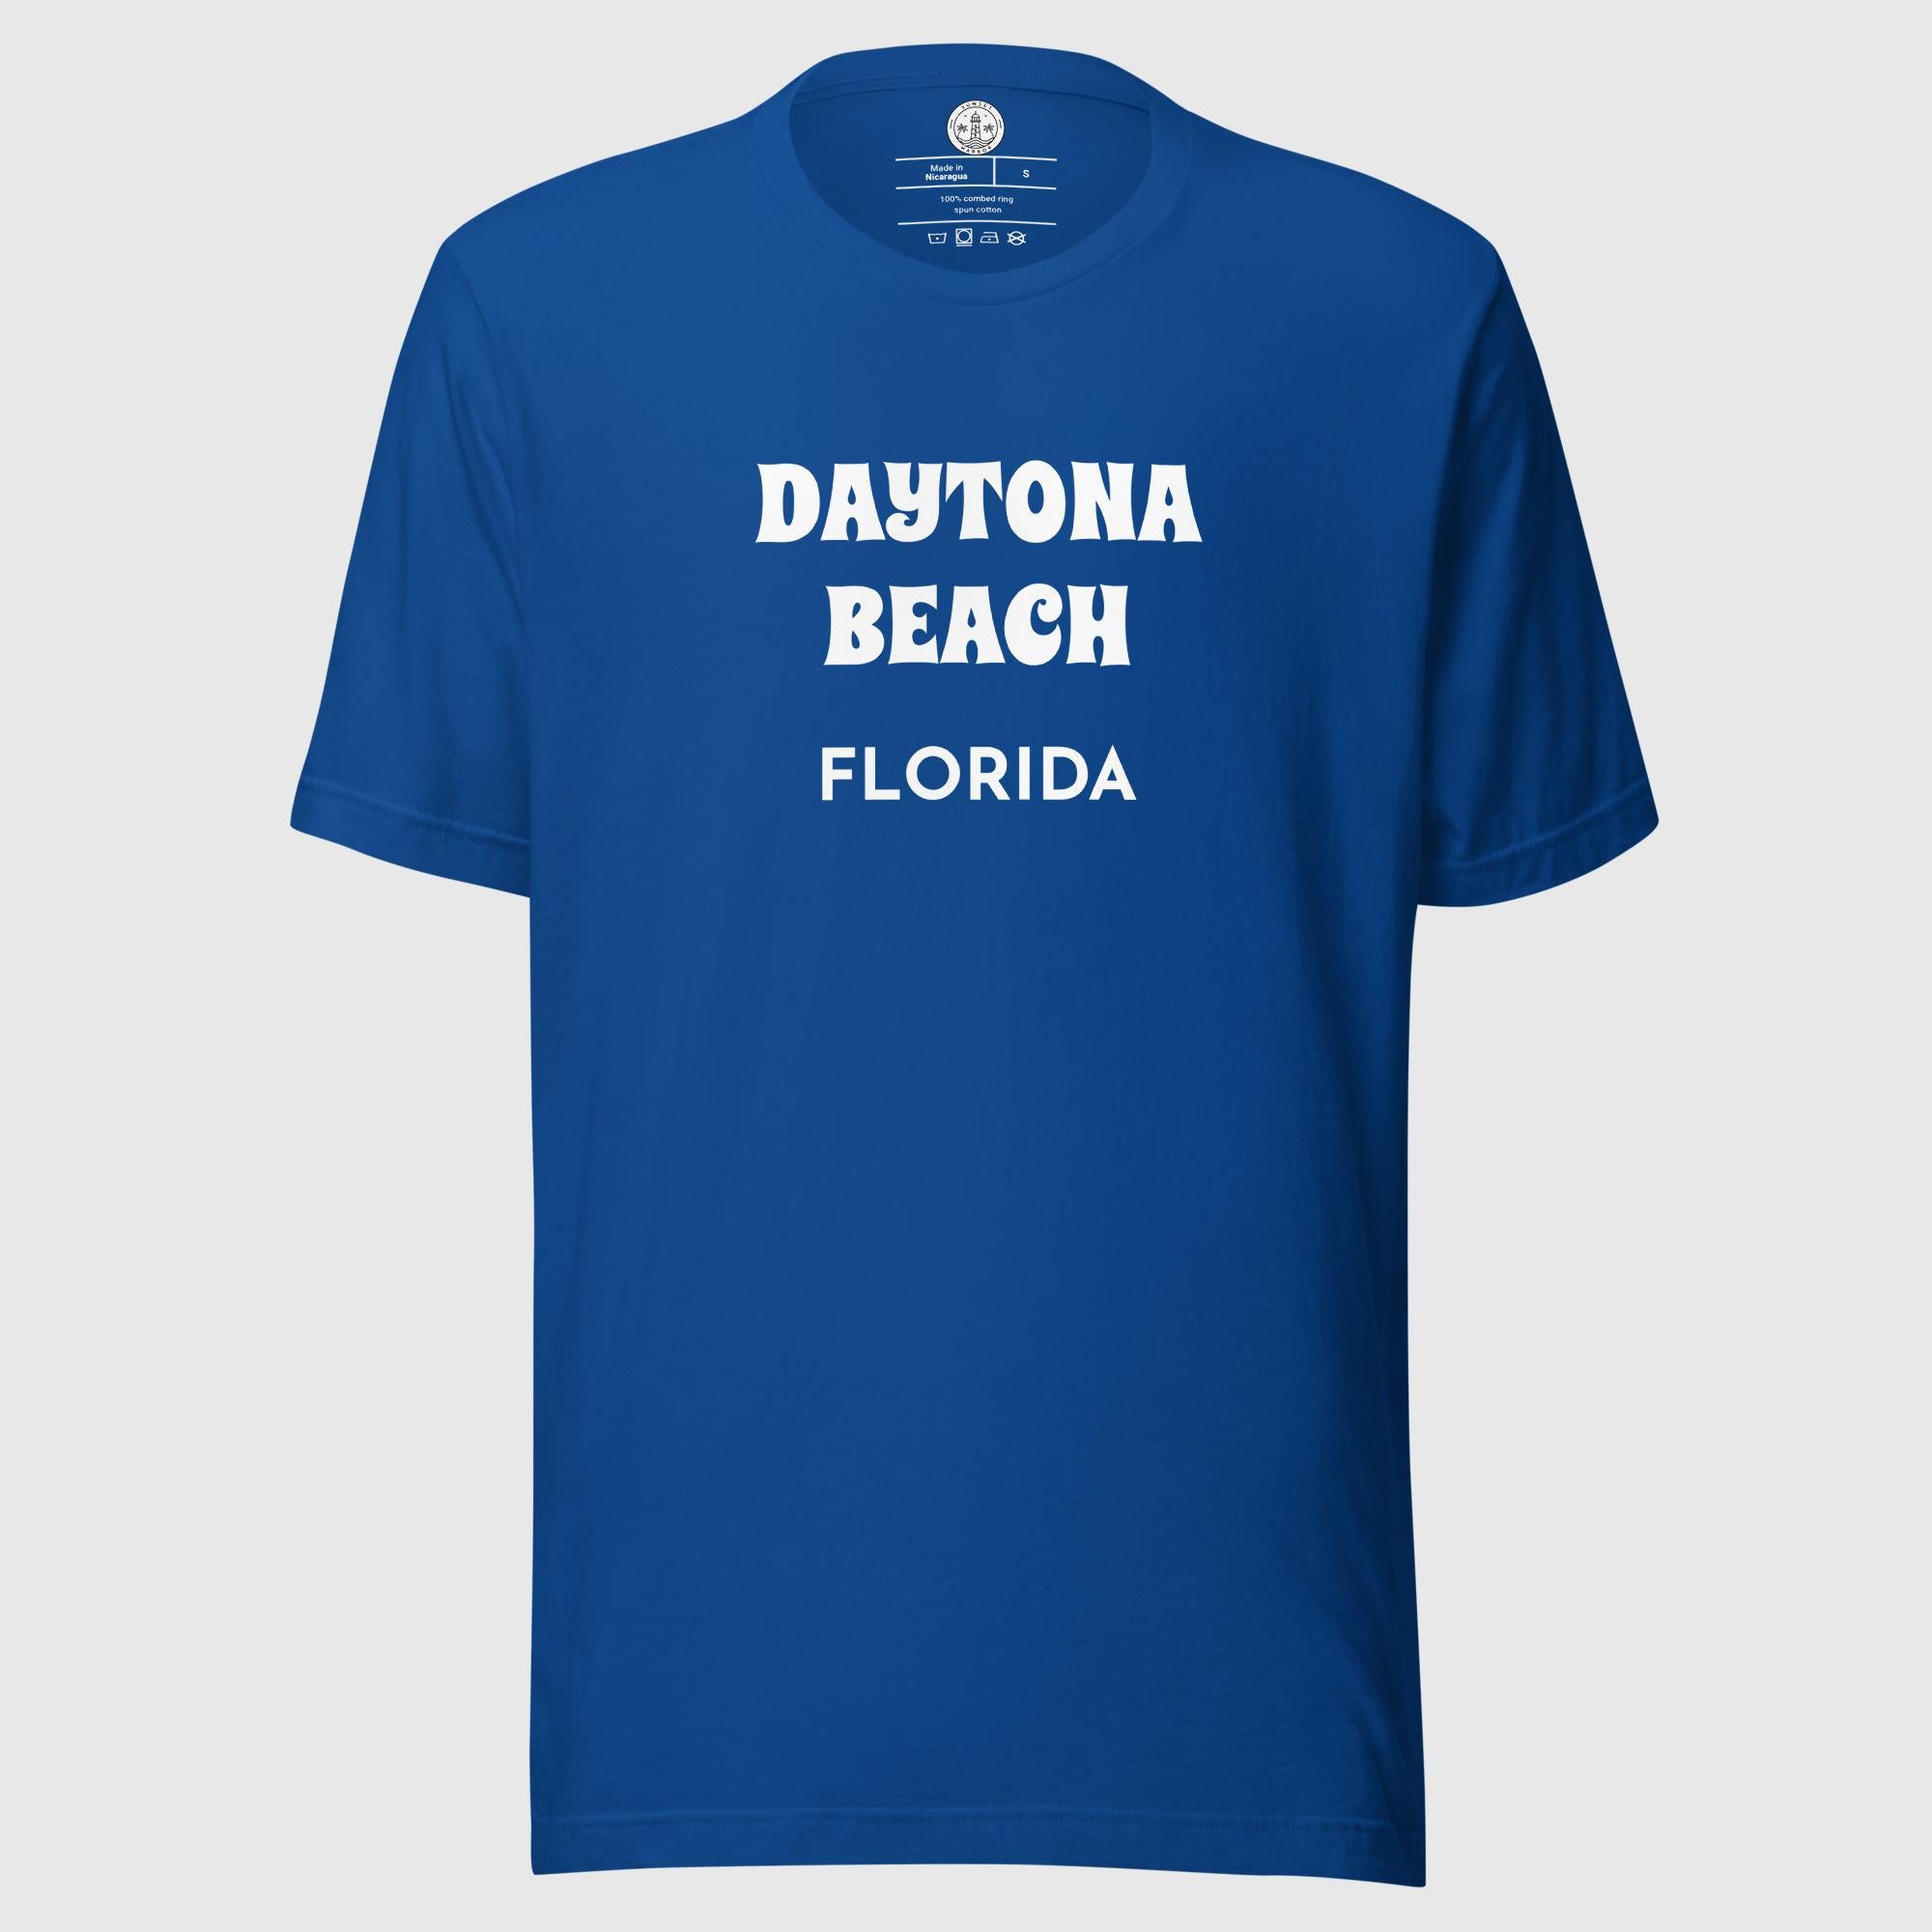 Camiseta unisex - Daytona Beach